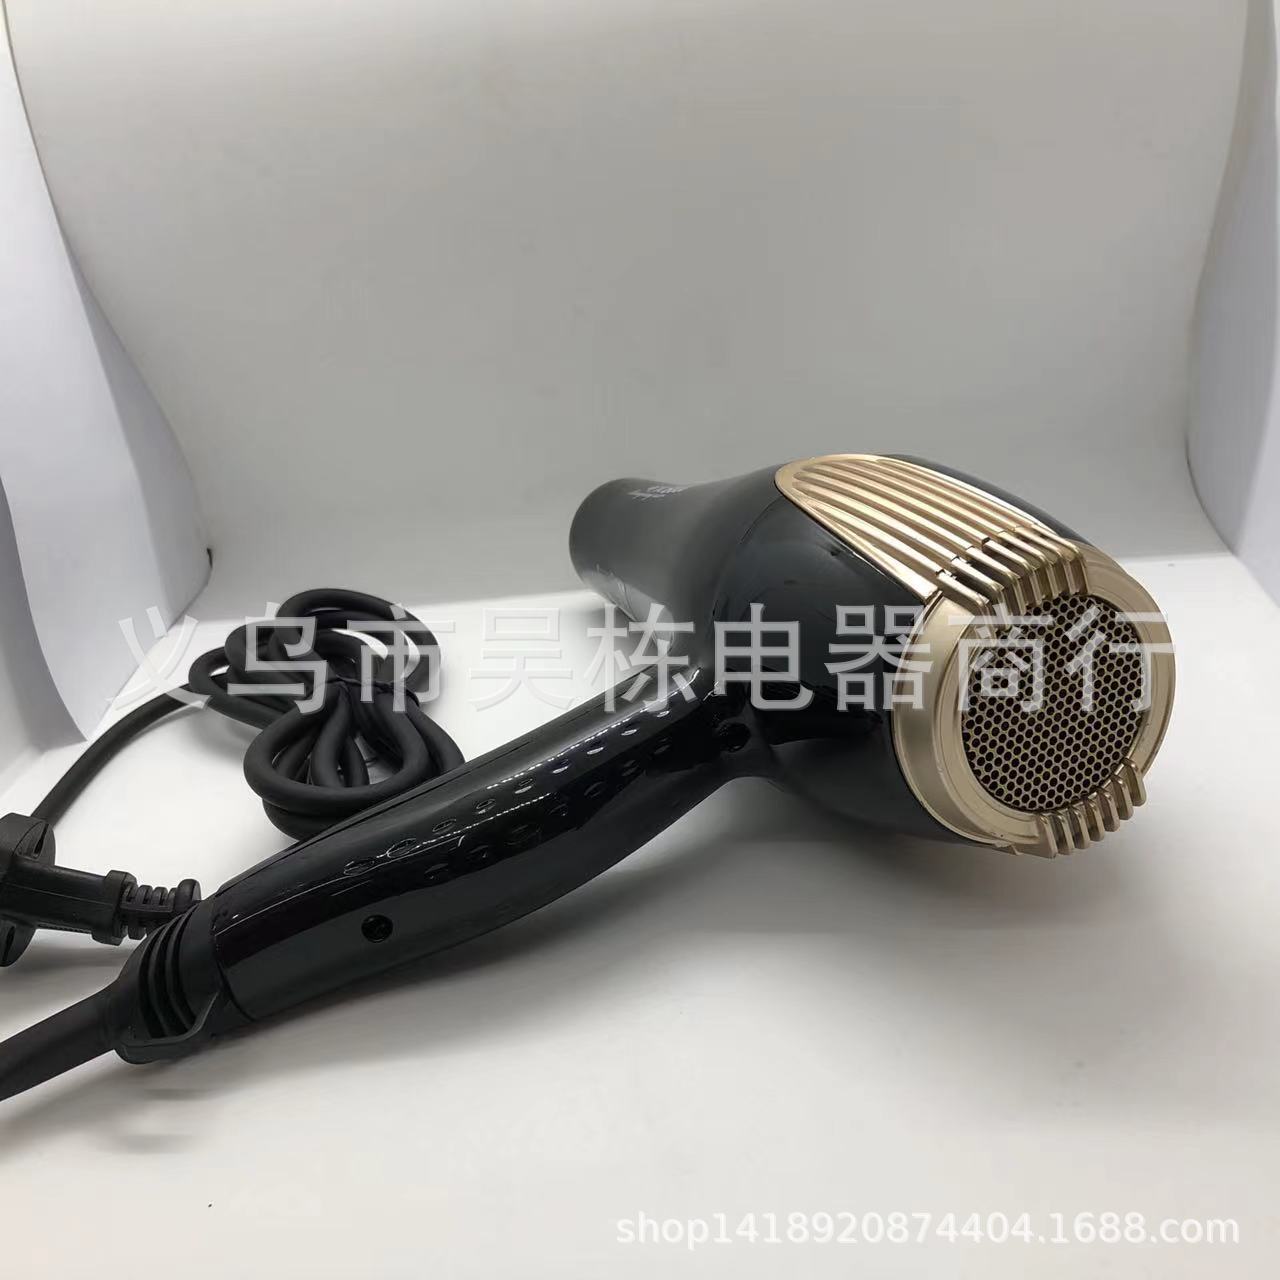 Mingkai Mk6000 High-Power Hair Dryer Black